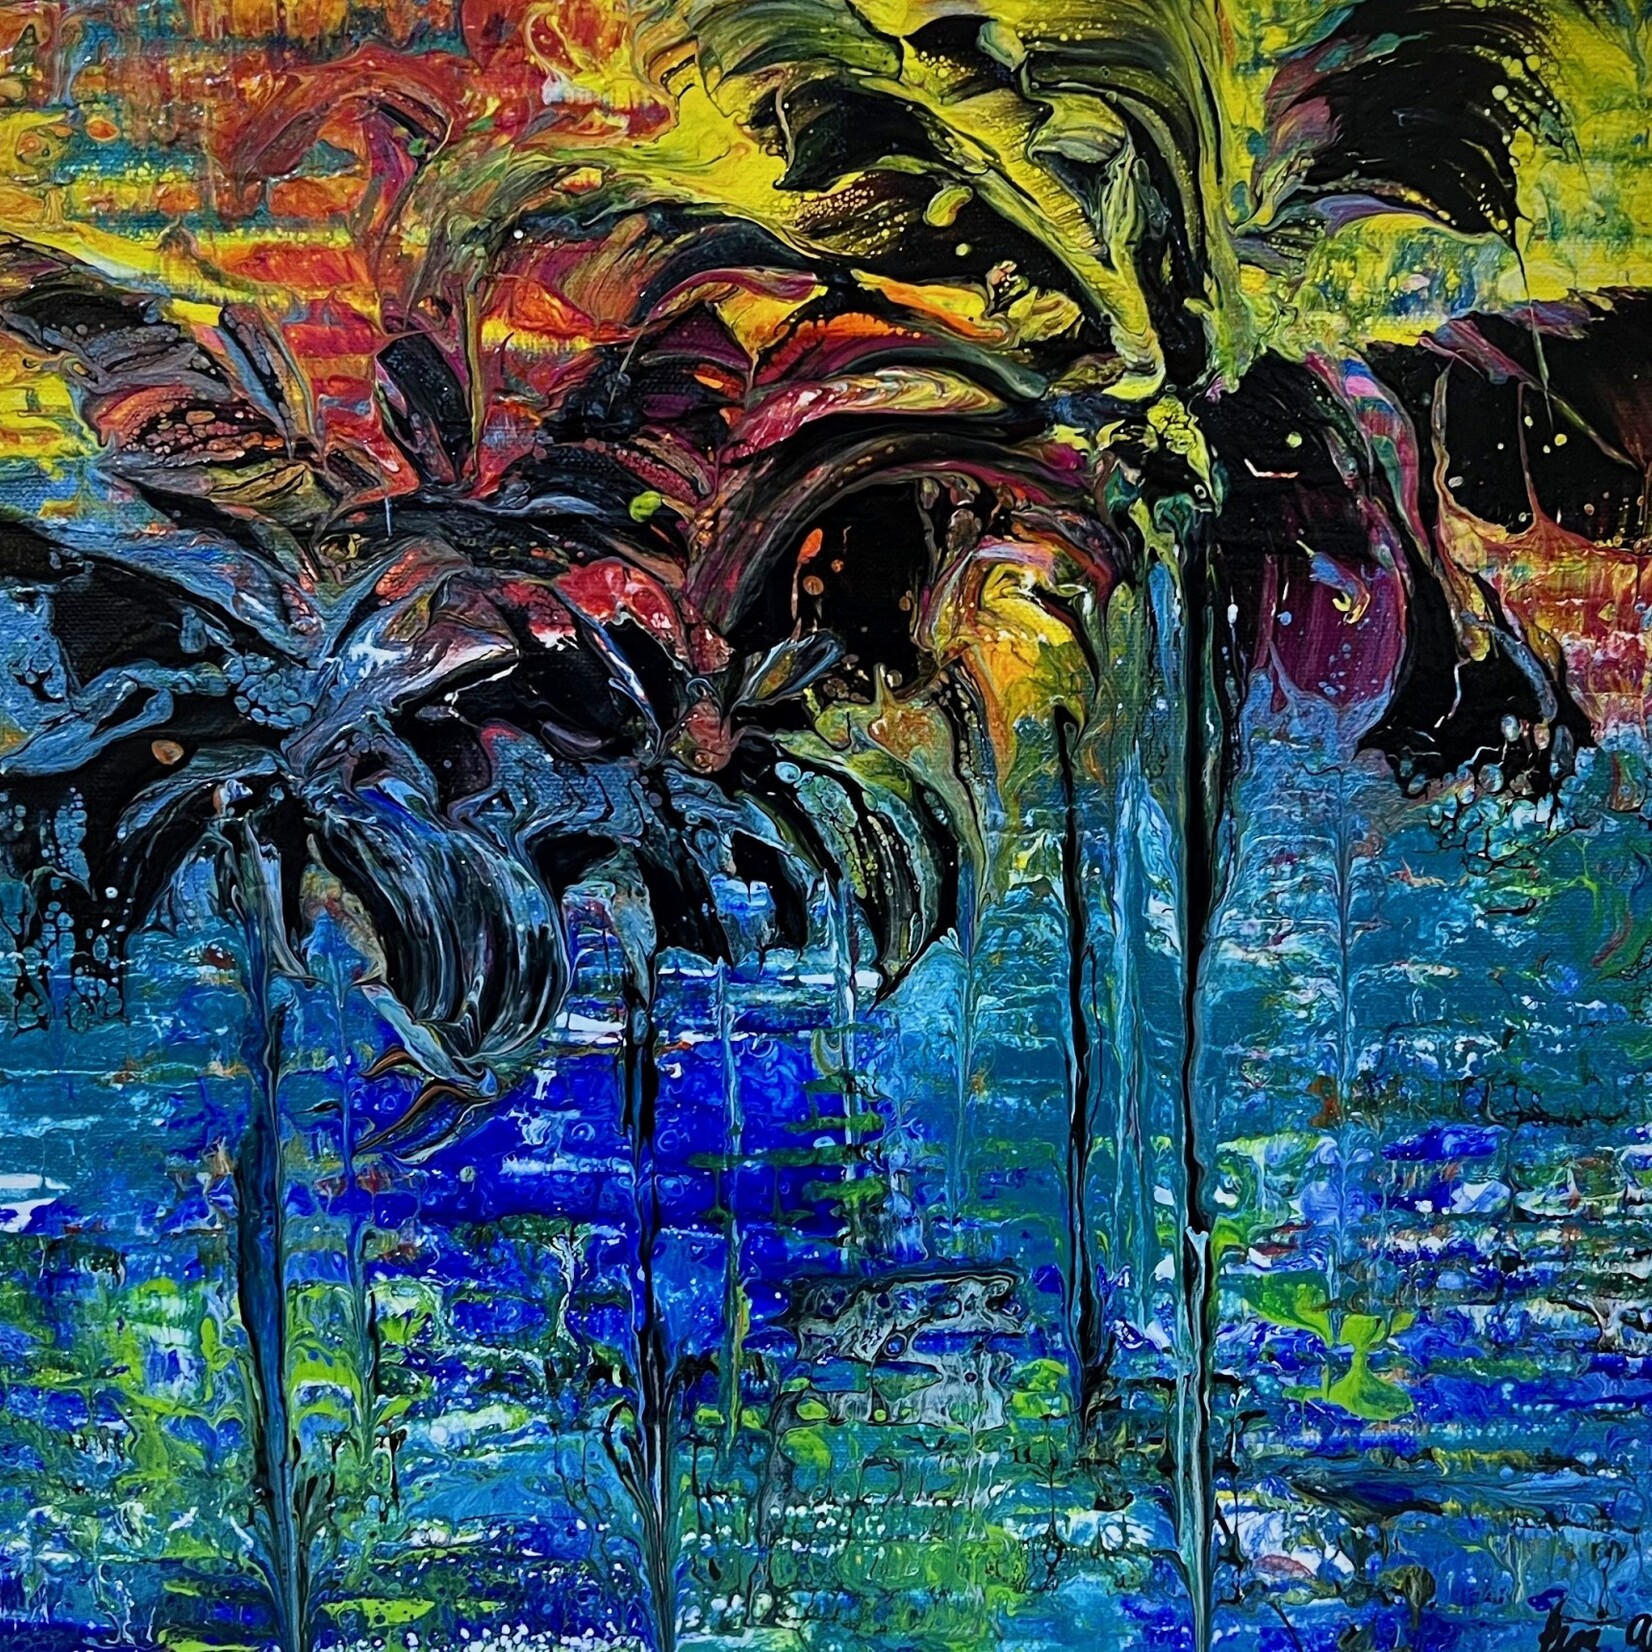 Lisa Jill Allison "Merging" Orig acrylic/Mixed media on gw canvas, 20x16"", LISA